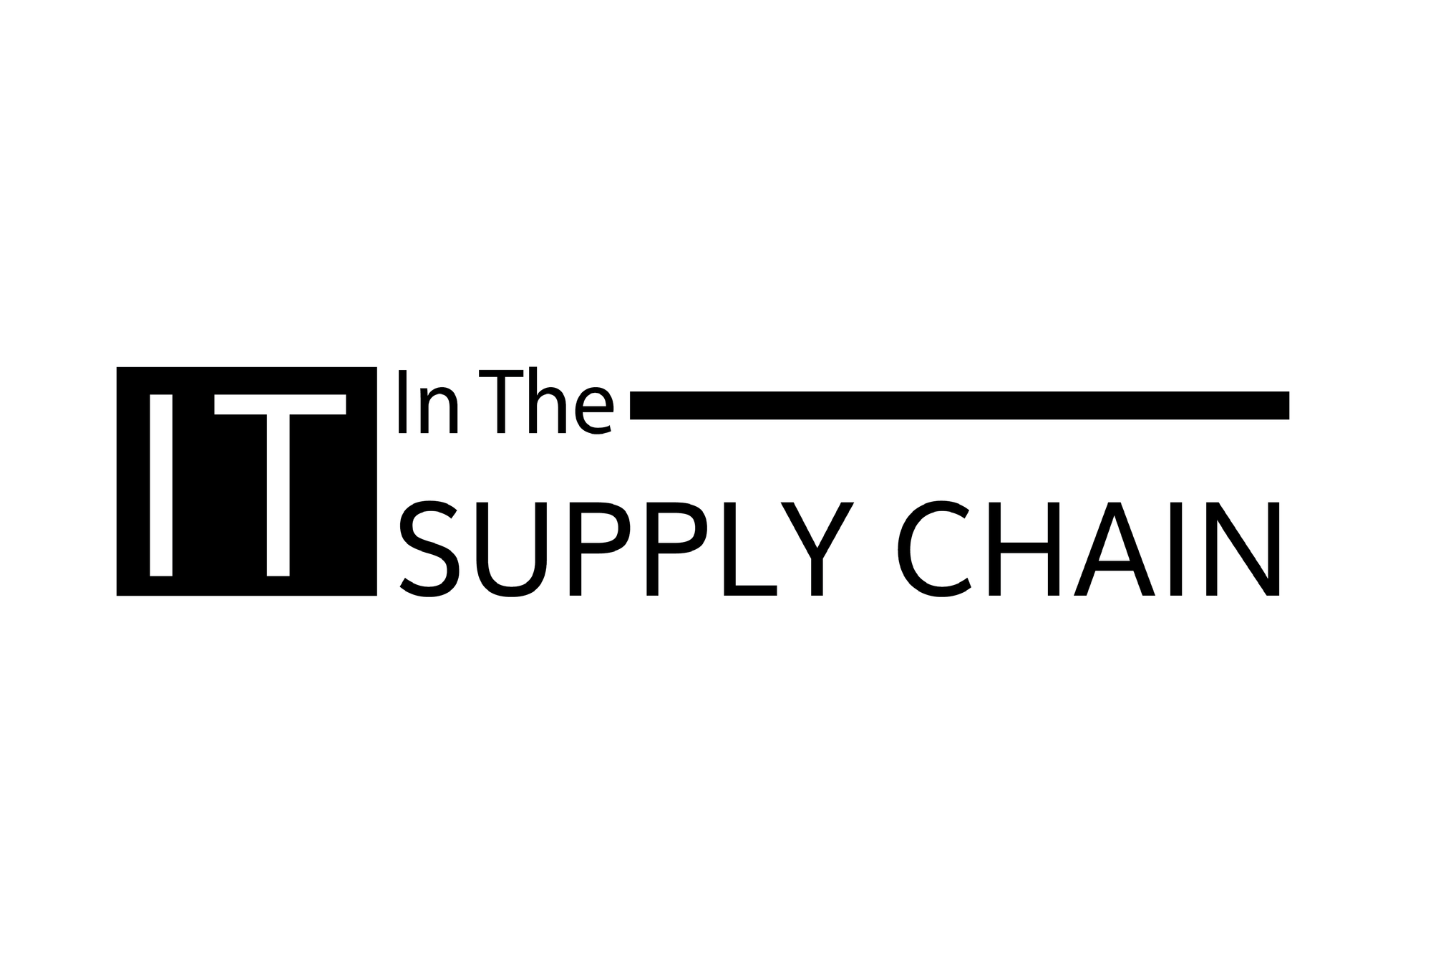 IT Supply Chain's logo